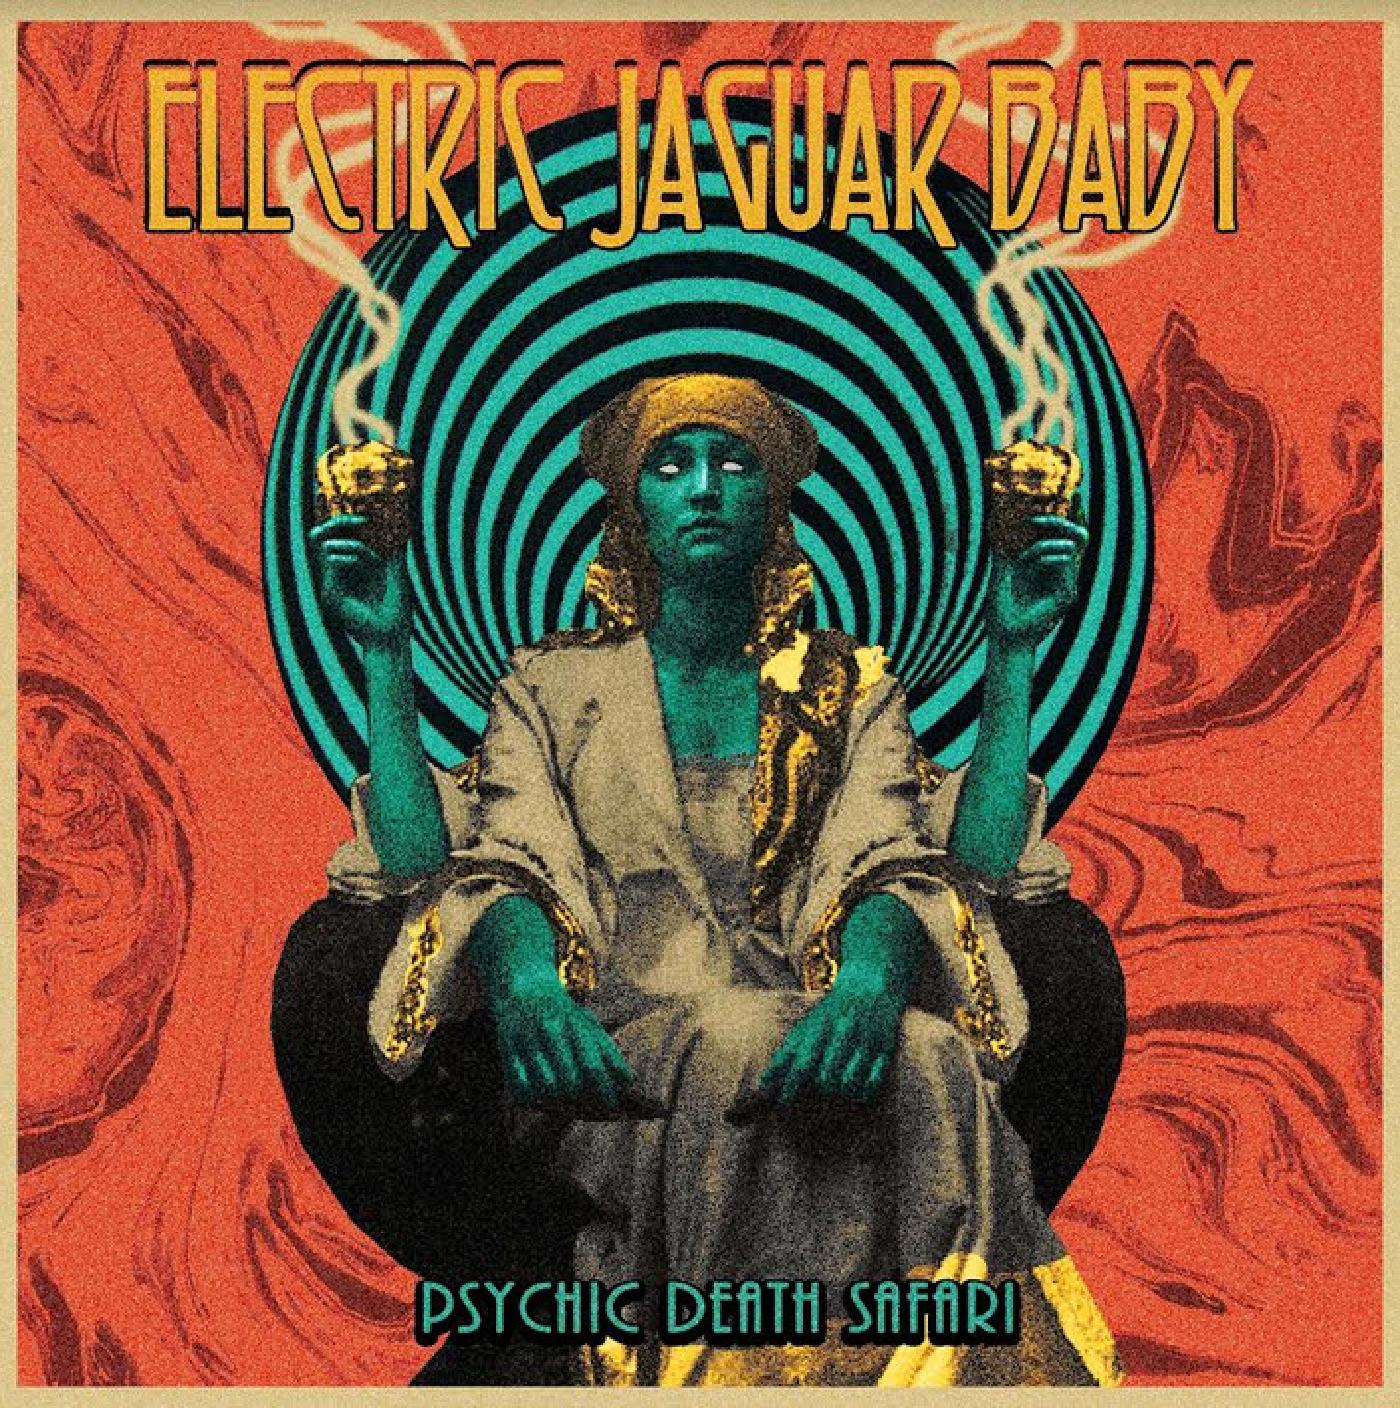 Electric Jaguar Baby's album cover for Psychic Death Safari